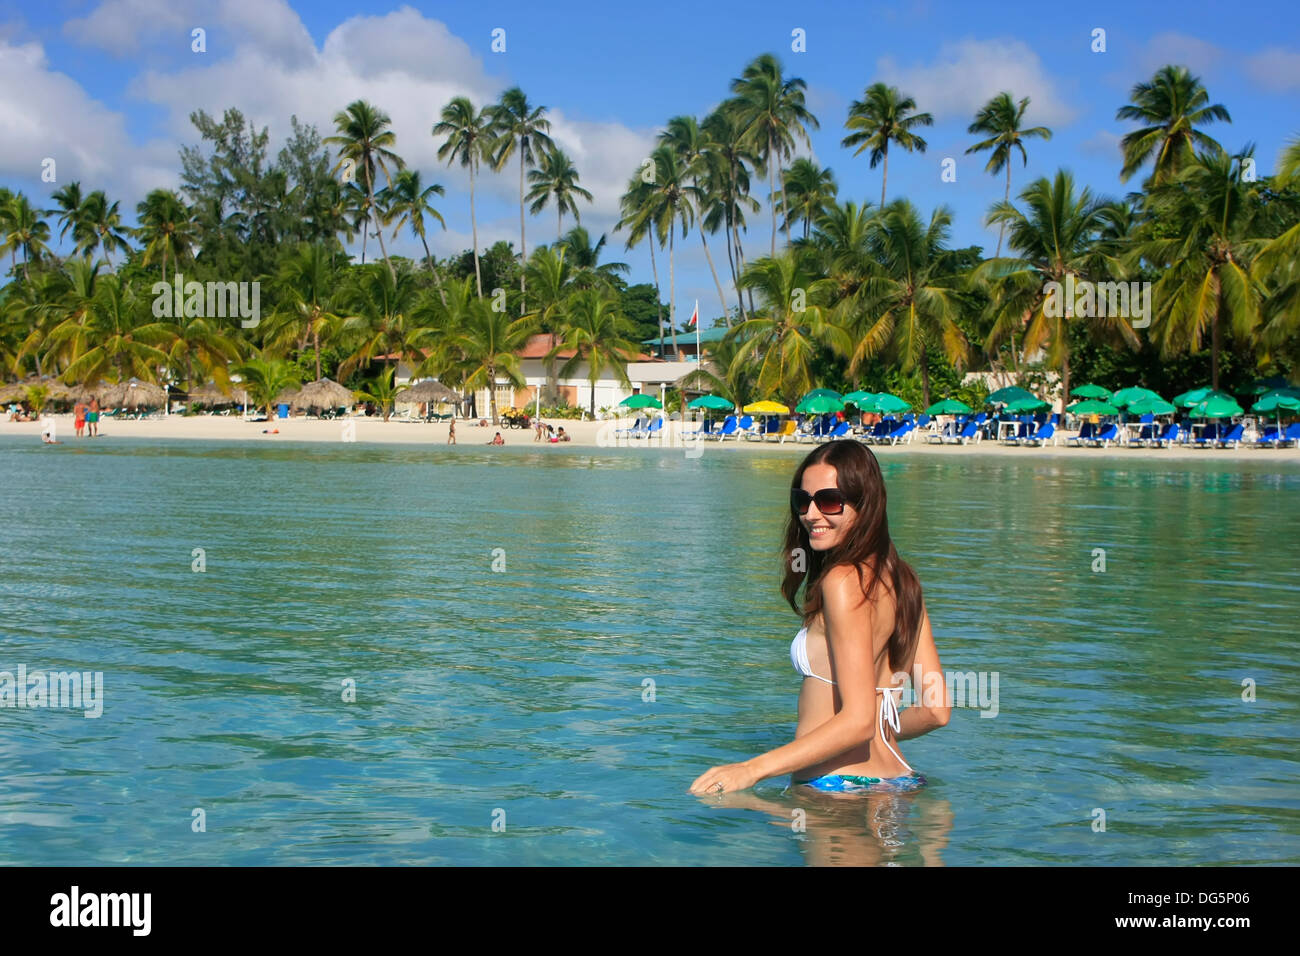 Young woman in bikini standing in clear water, Boca Chica beach, Dominican  Republic Stock Photo - Alamy